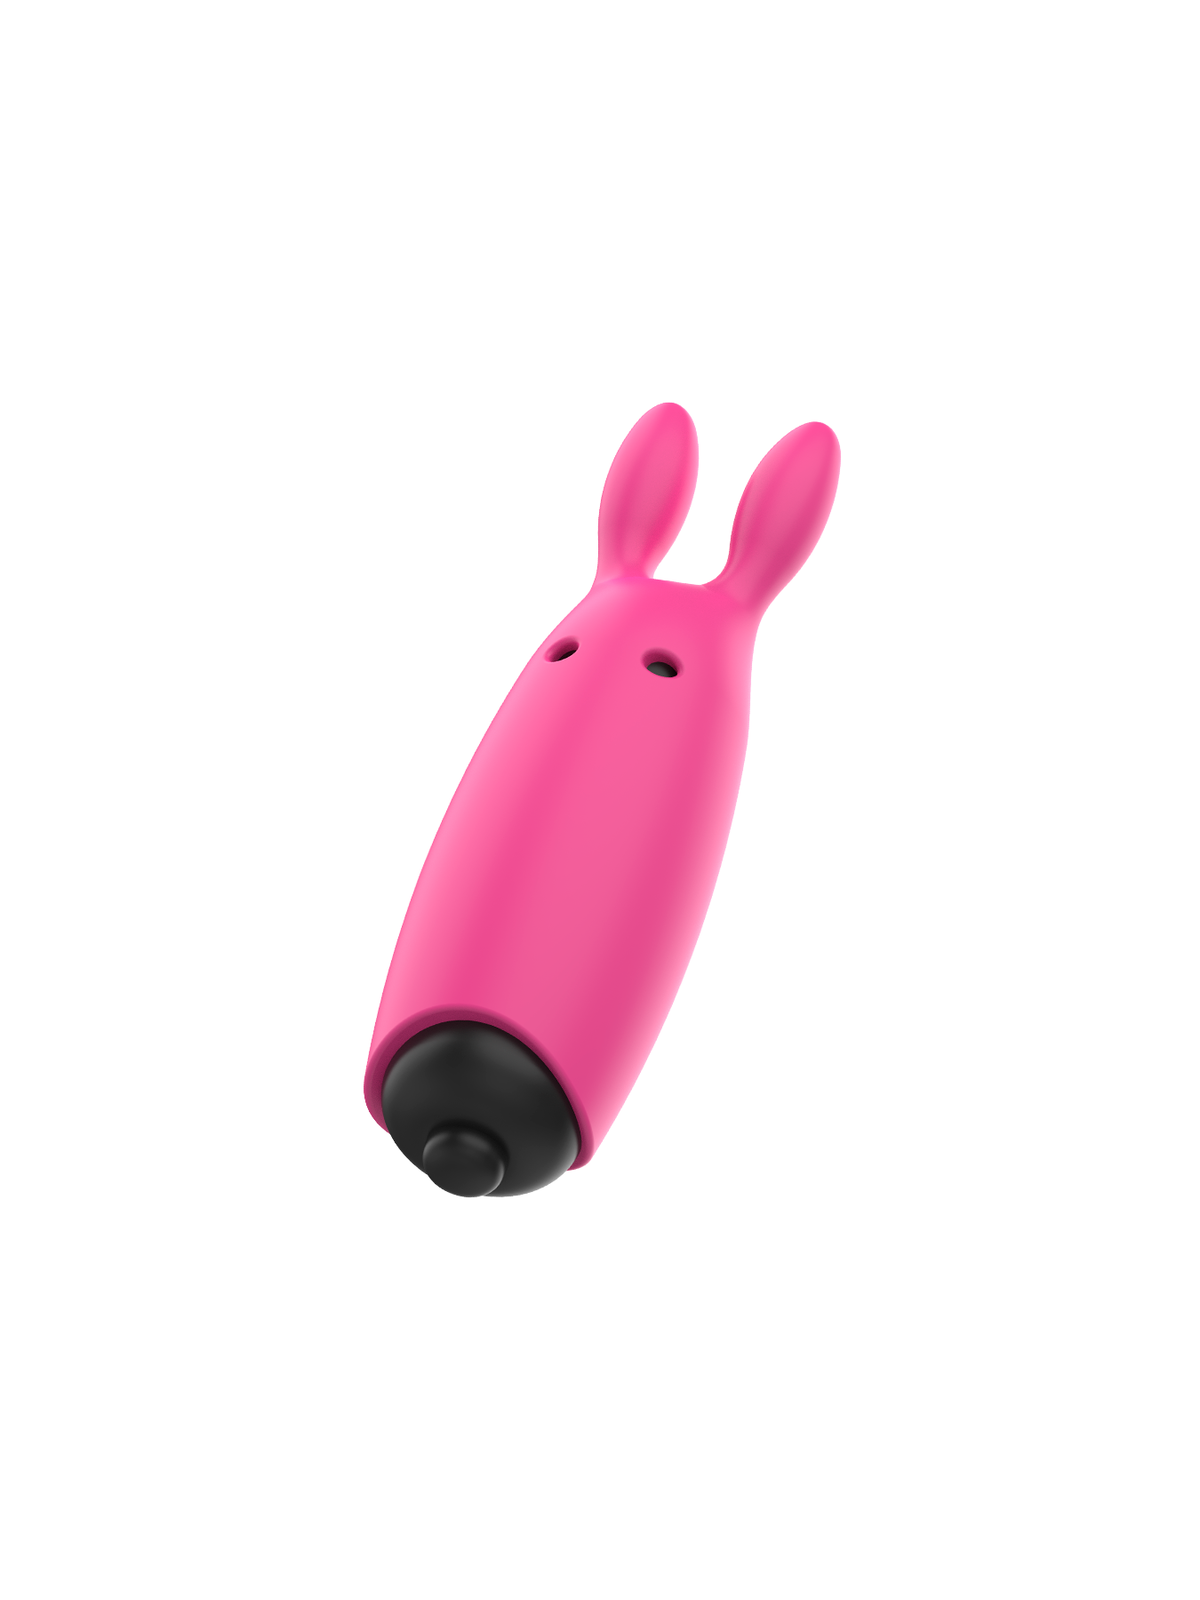 Ohmama Pocket Vibe Pink Xmas Edition - Comprar Bala vibradora Ohmama - Balas vibradoras (1)